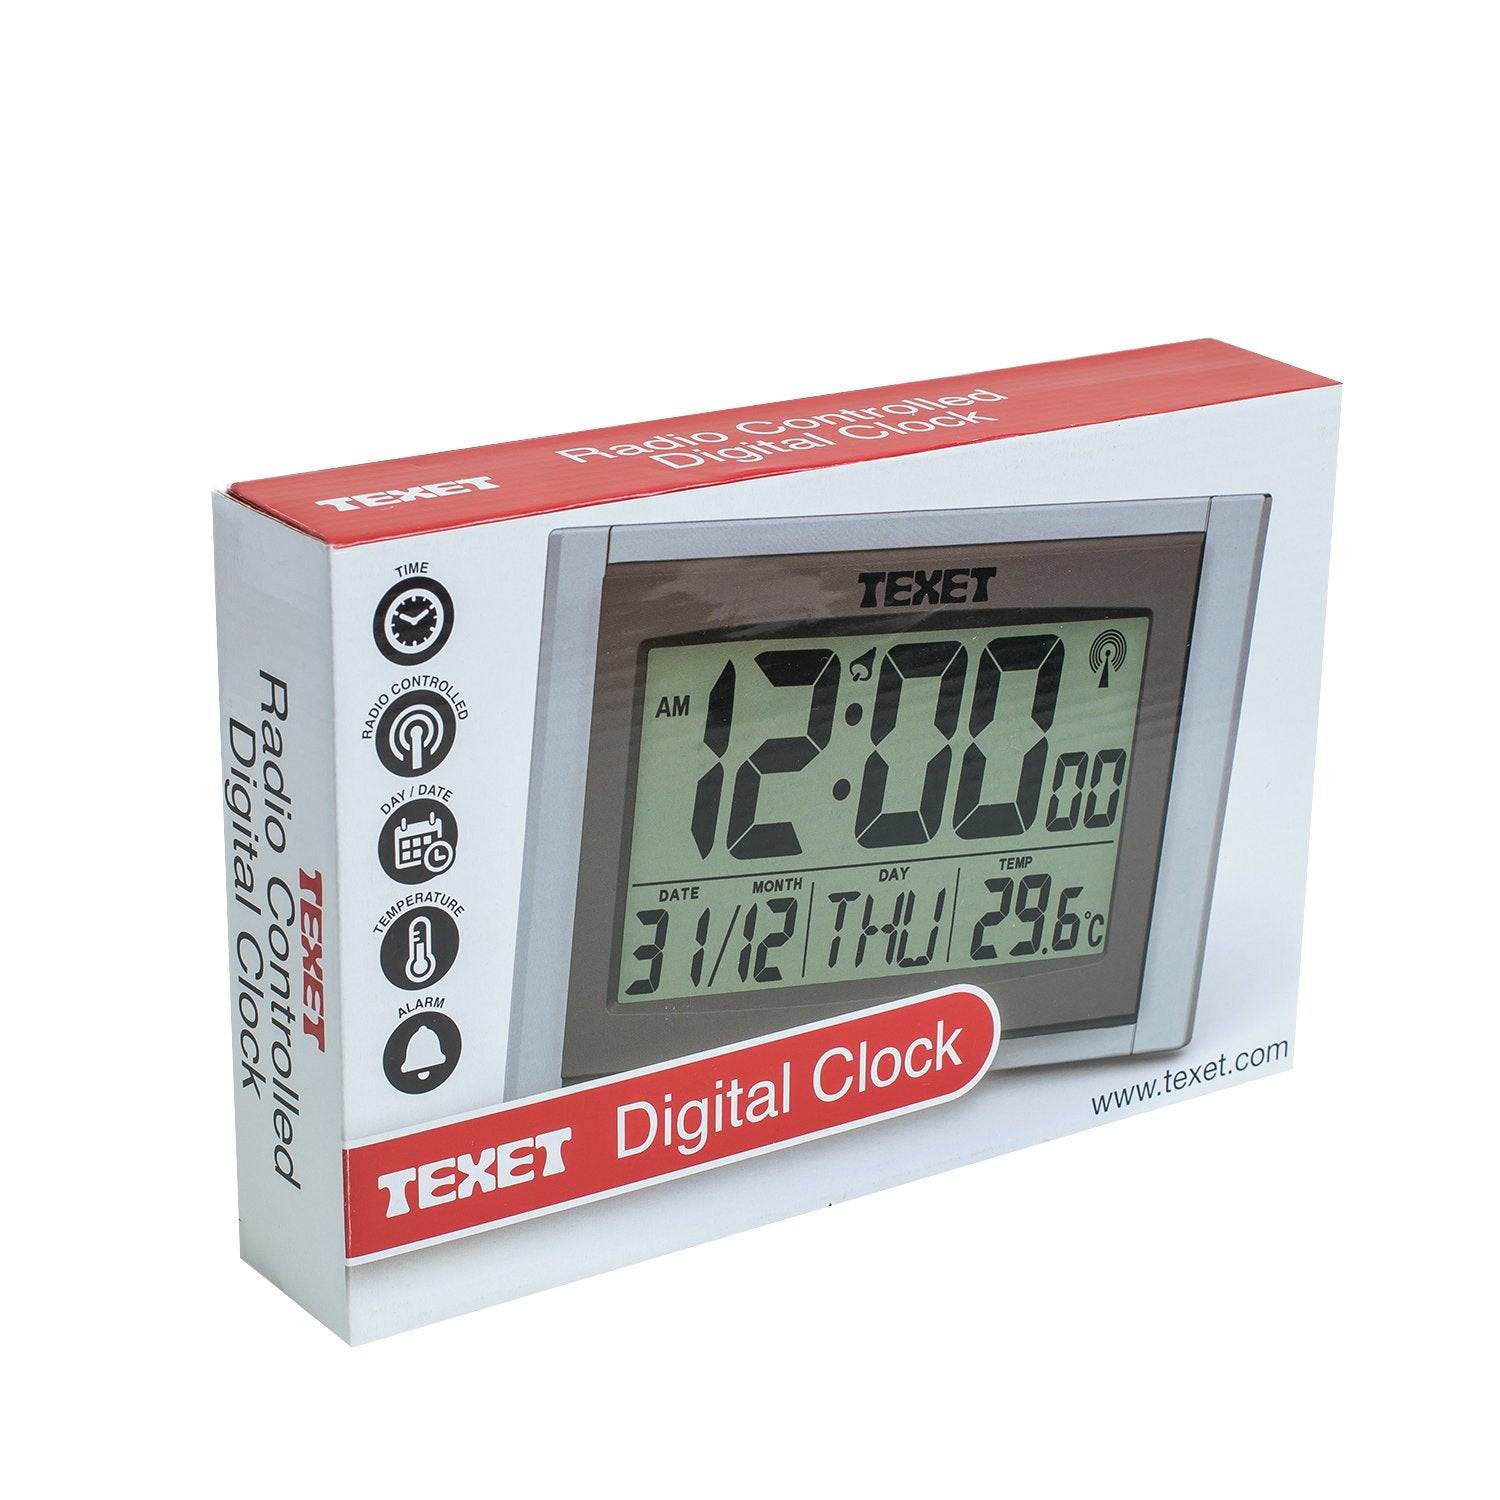 Digital Clock Radio Controlled